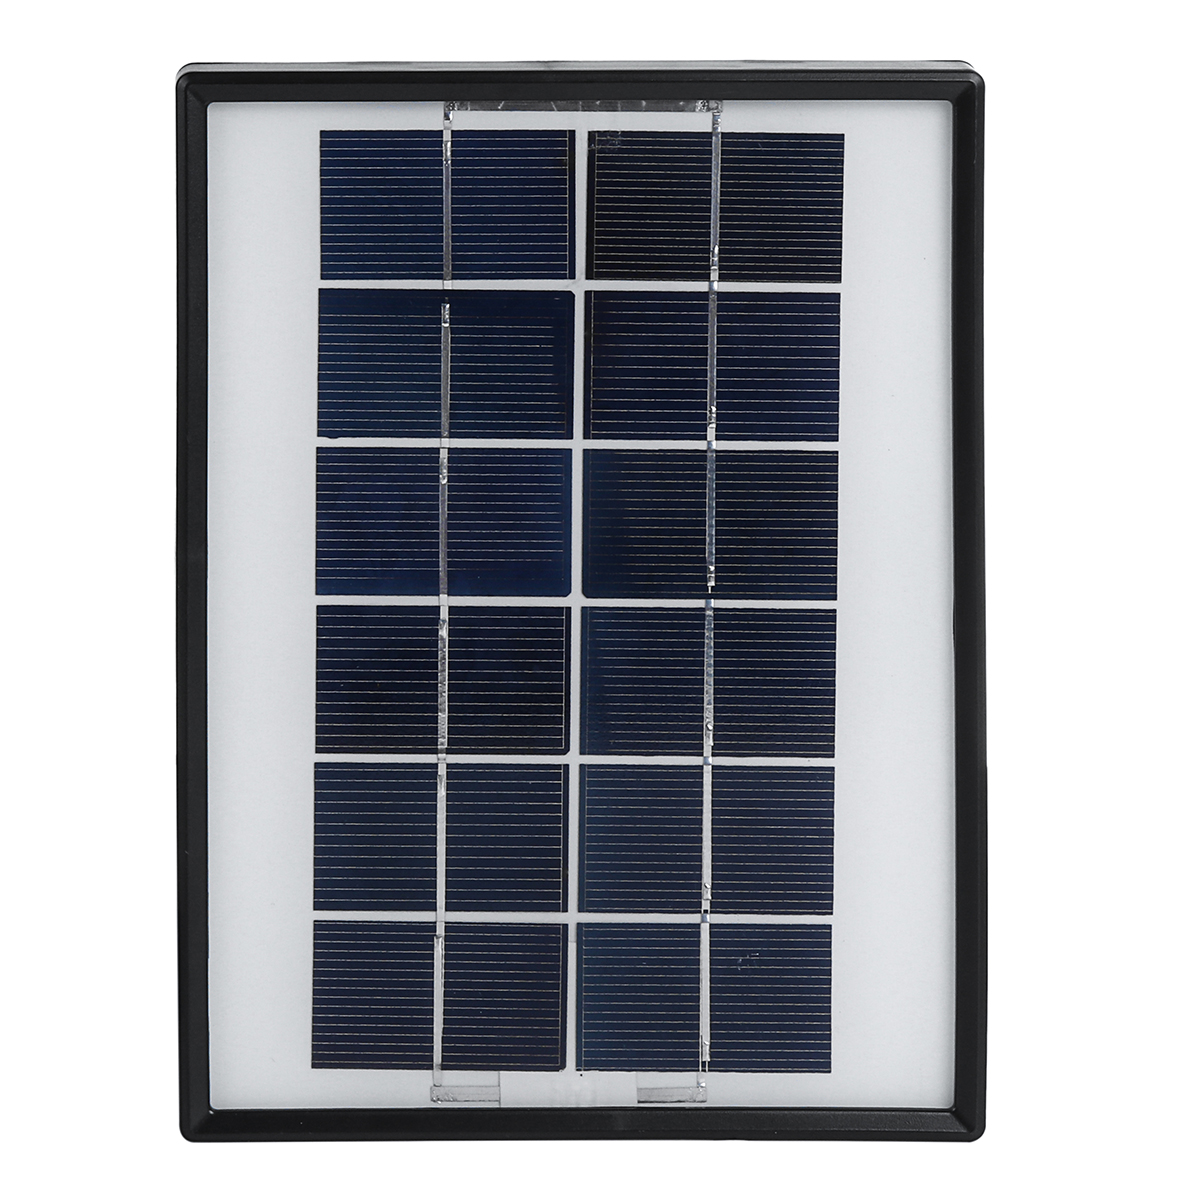 Solar-Powered-System-37V-4400mAh-Li-on-Battery-USB-Portable-Emergency-Light-Camping-Solar-Panel-1554236-8